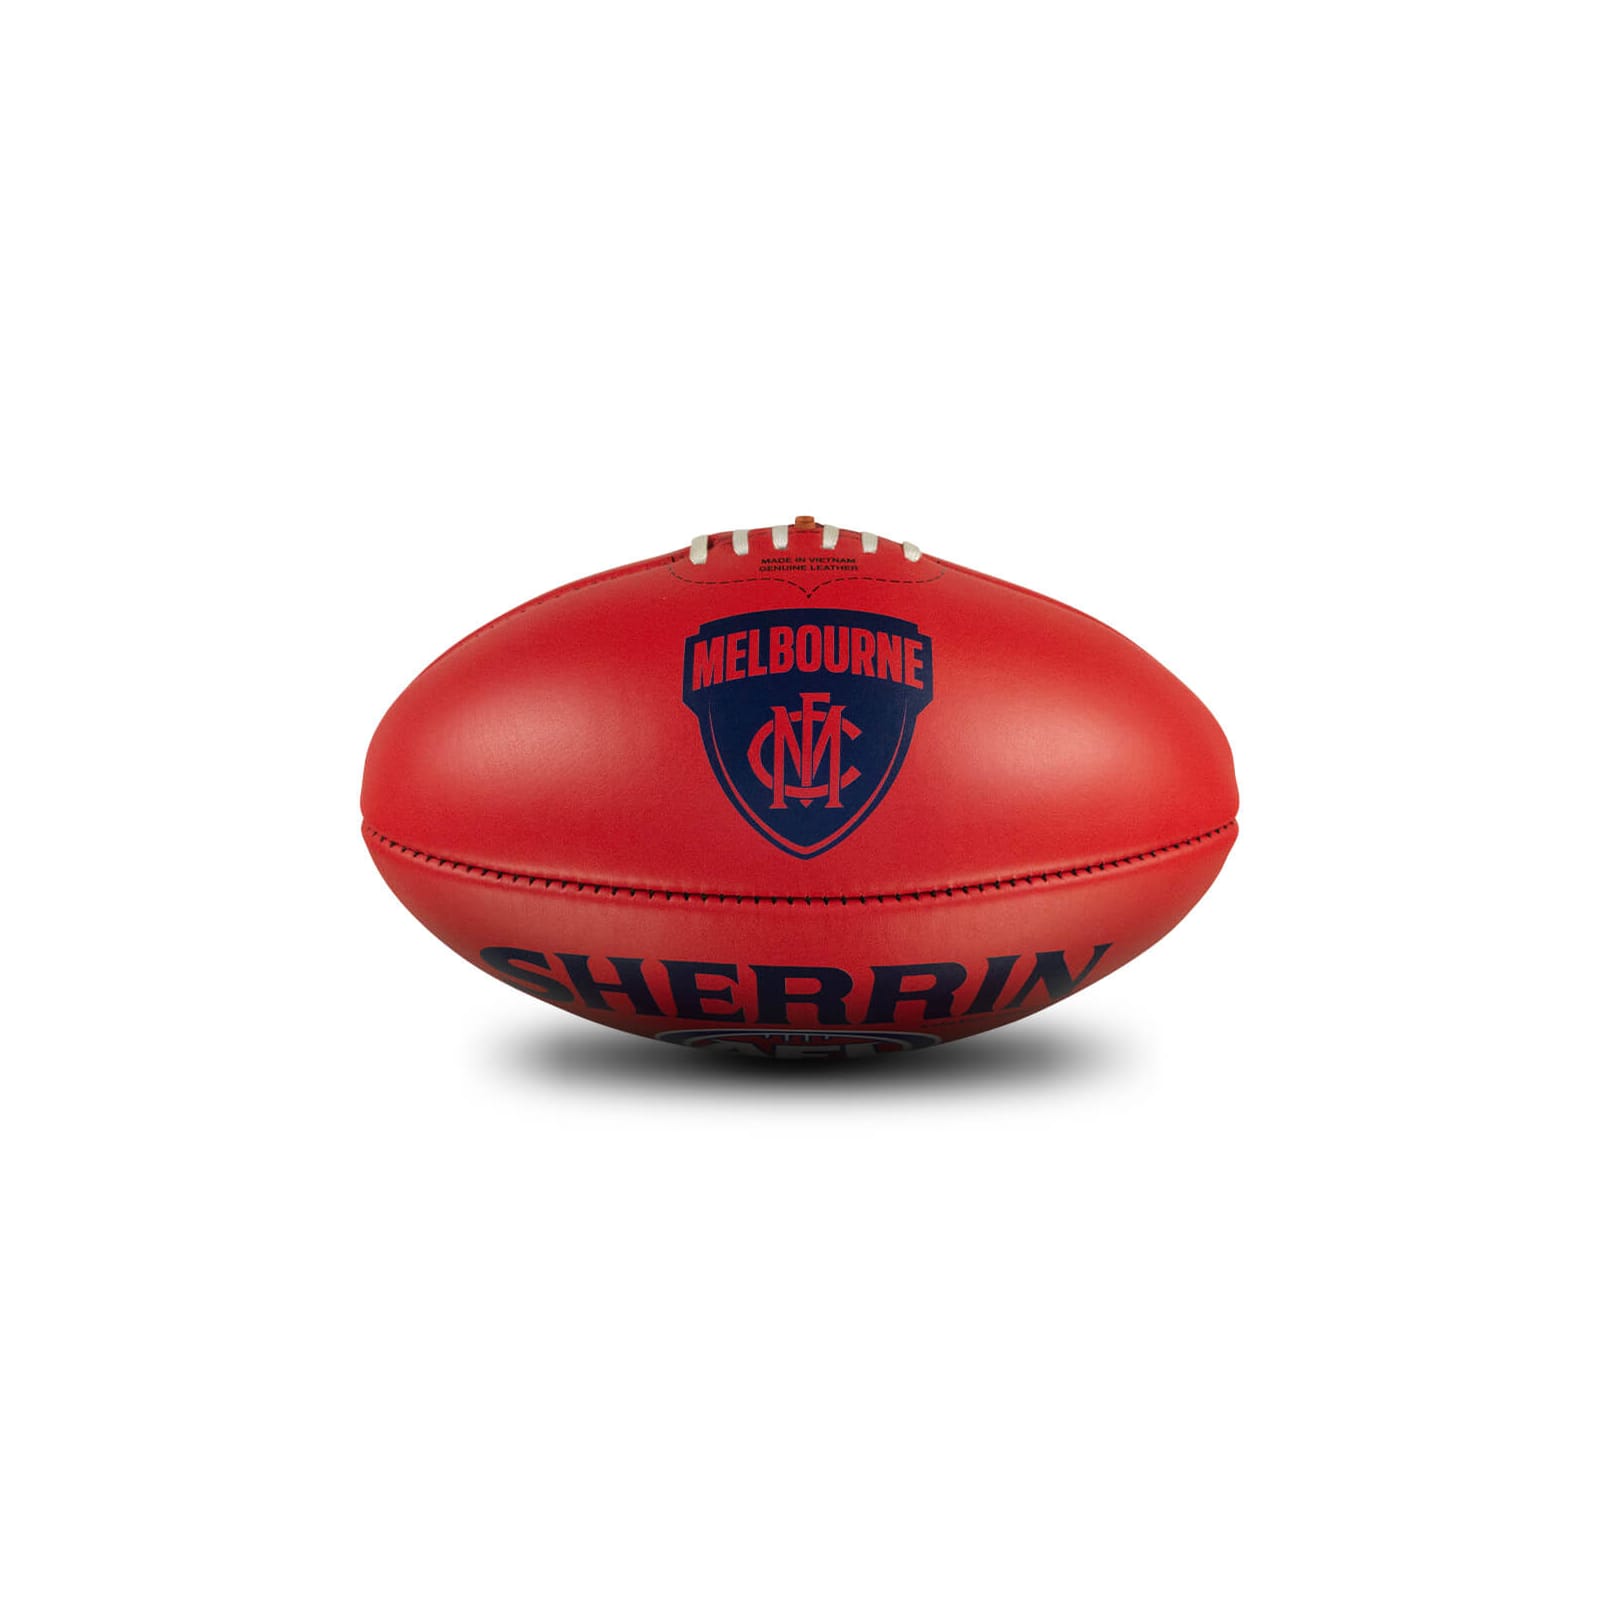 AFL Team Leather Ball - Melbourne Demons